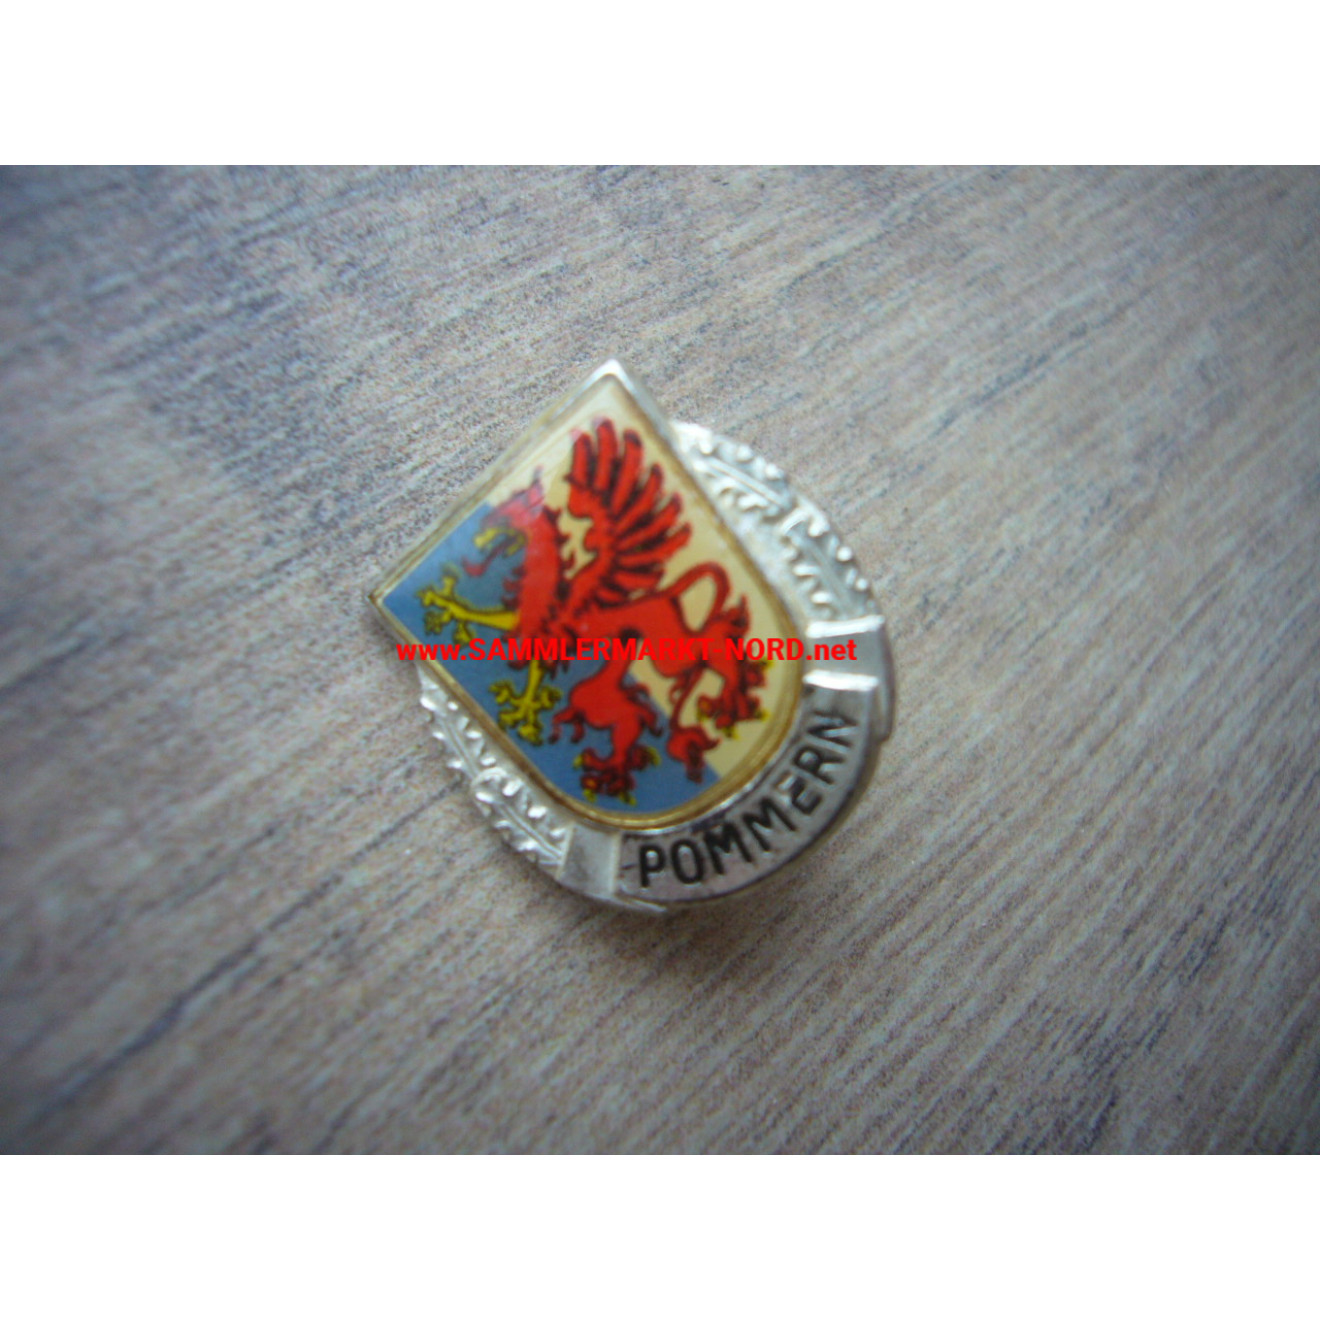 Pomeranian Association - Silver Badge of Honour